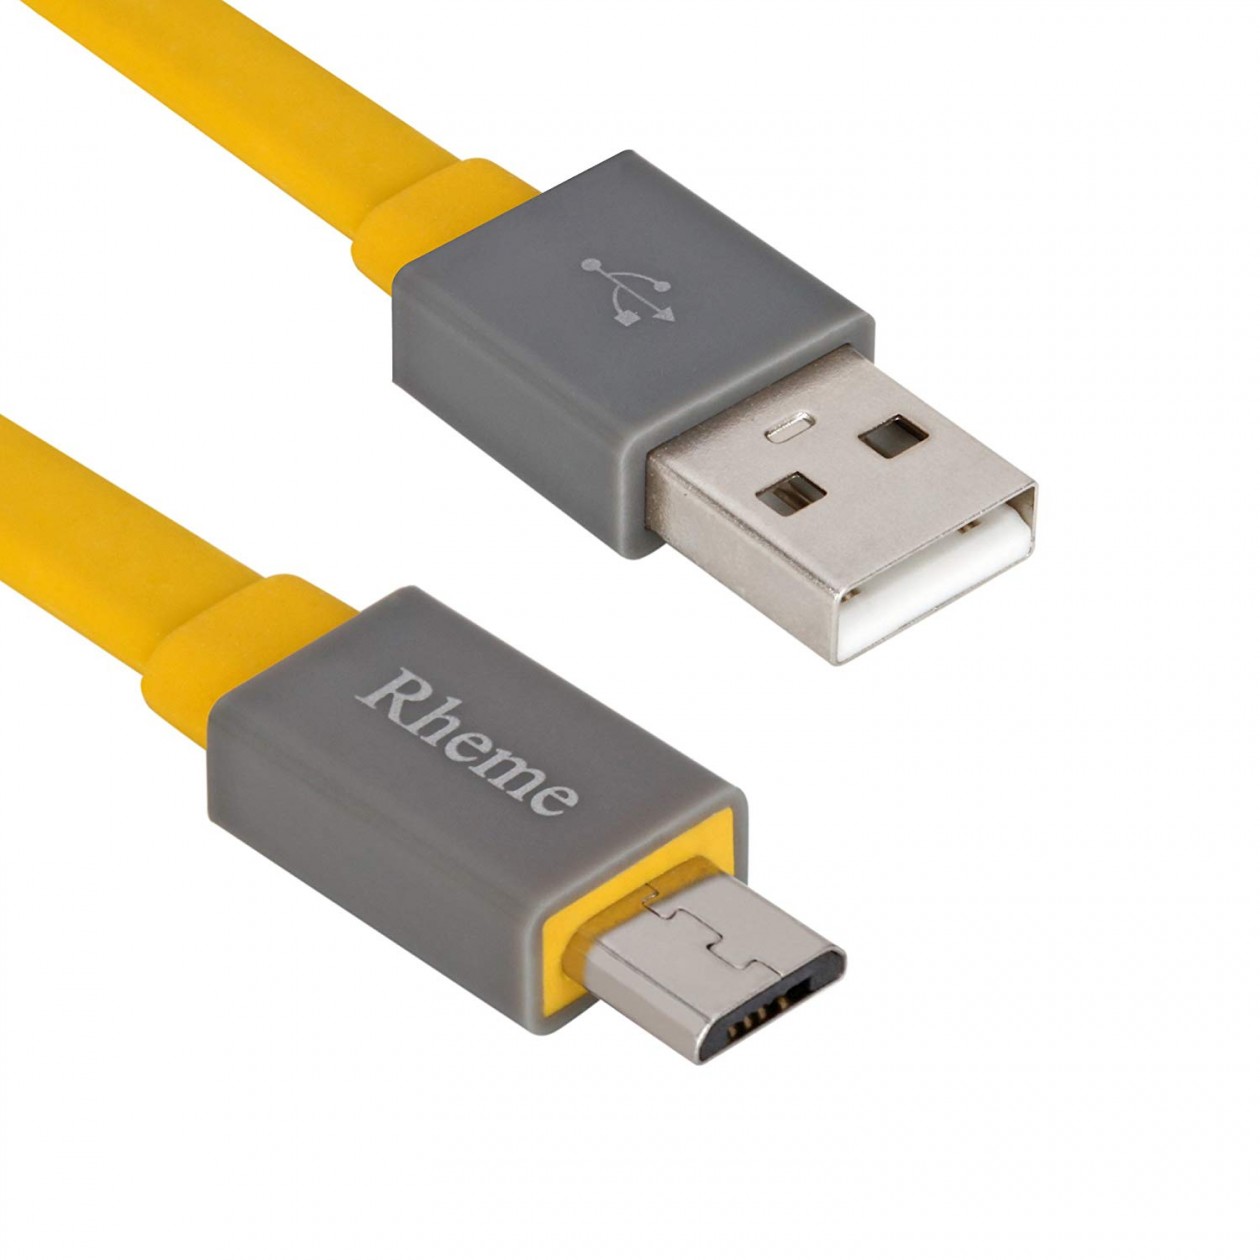 Rheme Colorful Flat Micro USB Data Sync Charging Cable Cord - Yellow